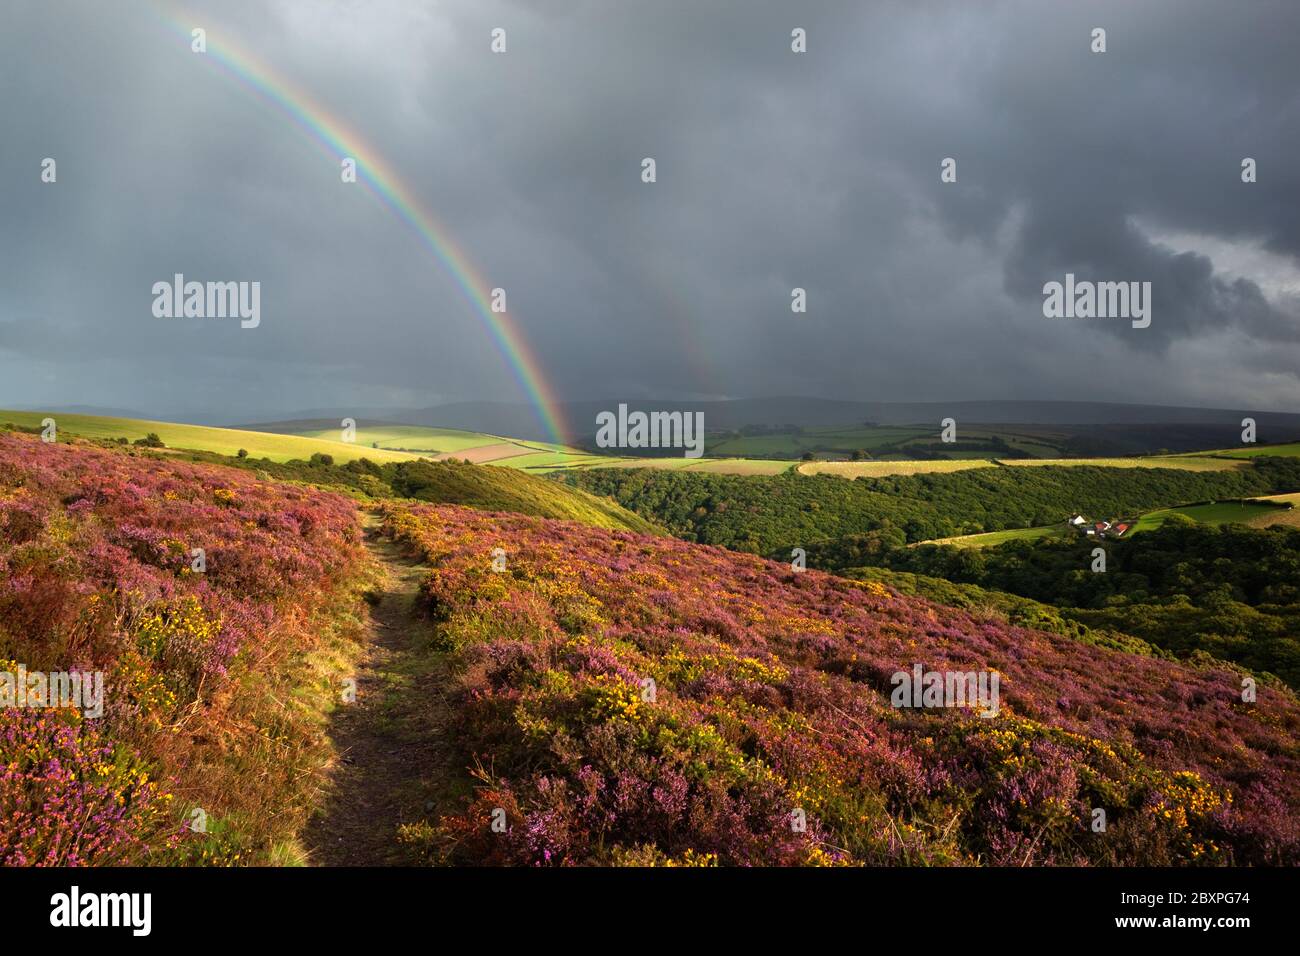 Rainbow over Heather clad Moorland looking towards Dunkery Beacon, Exmoor National Park, Somerset, England, United Kingdom Stock Photo